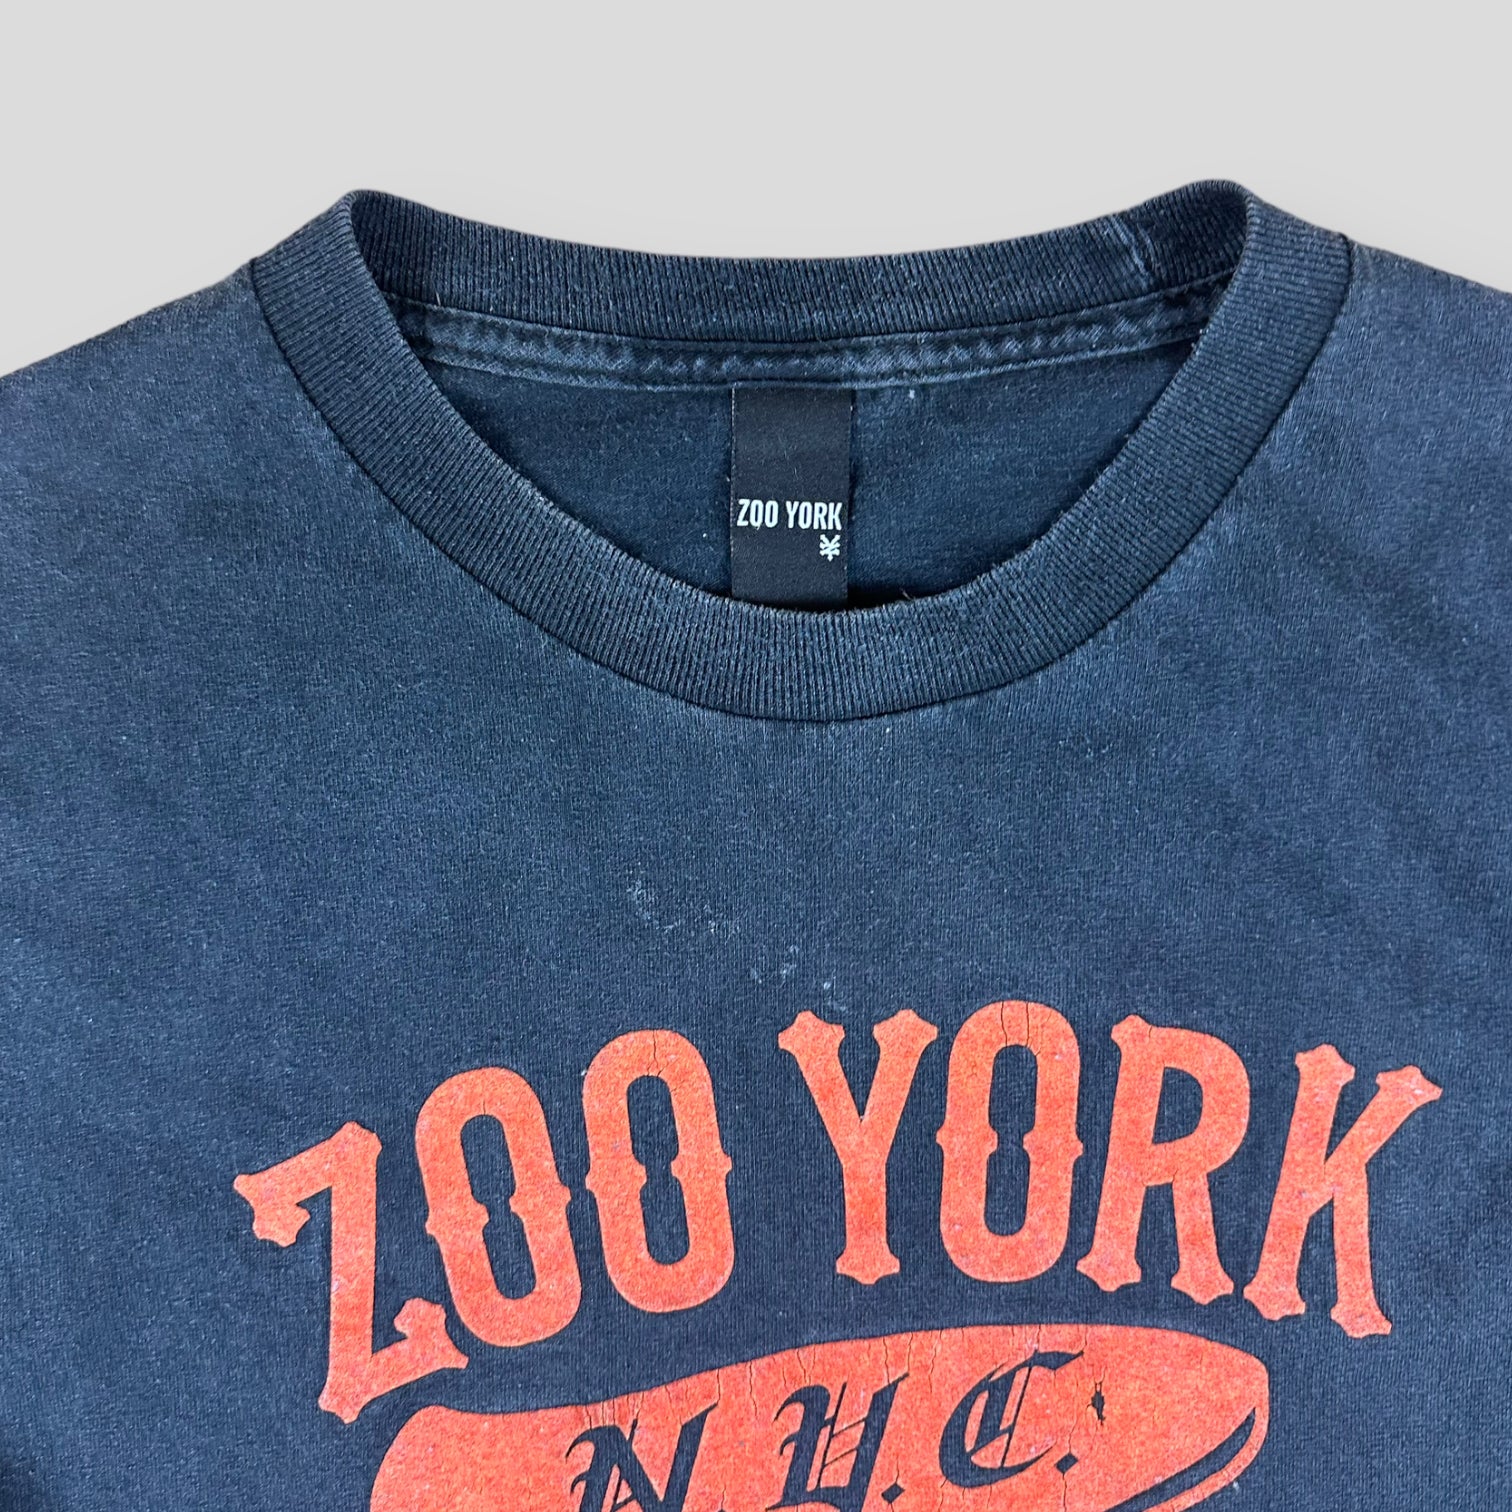 Zoo York vintage T-shirt